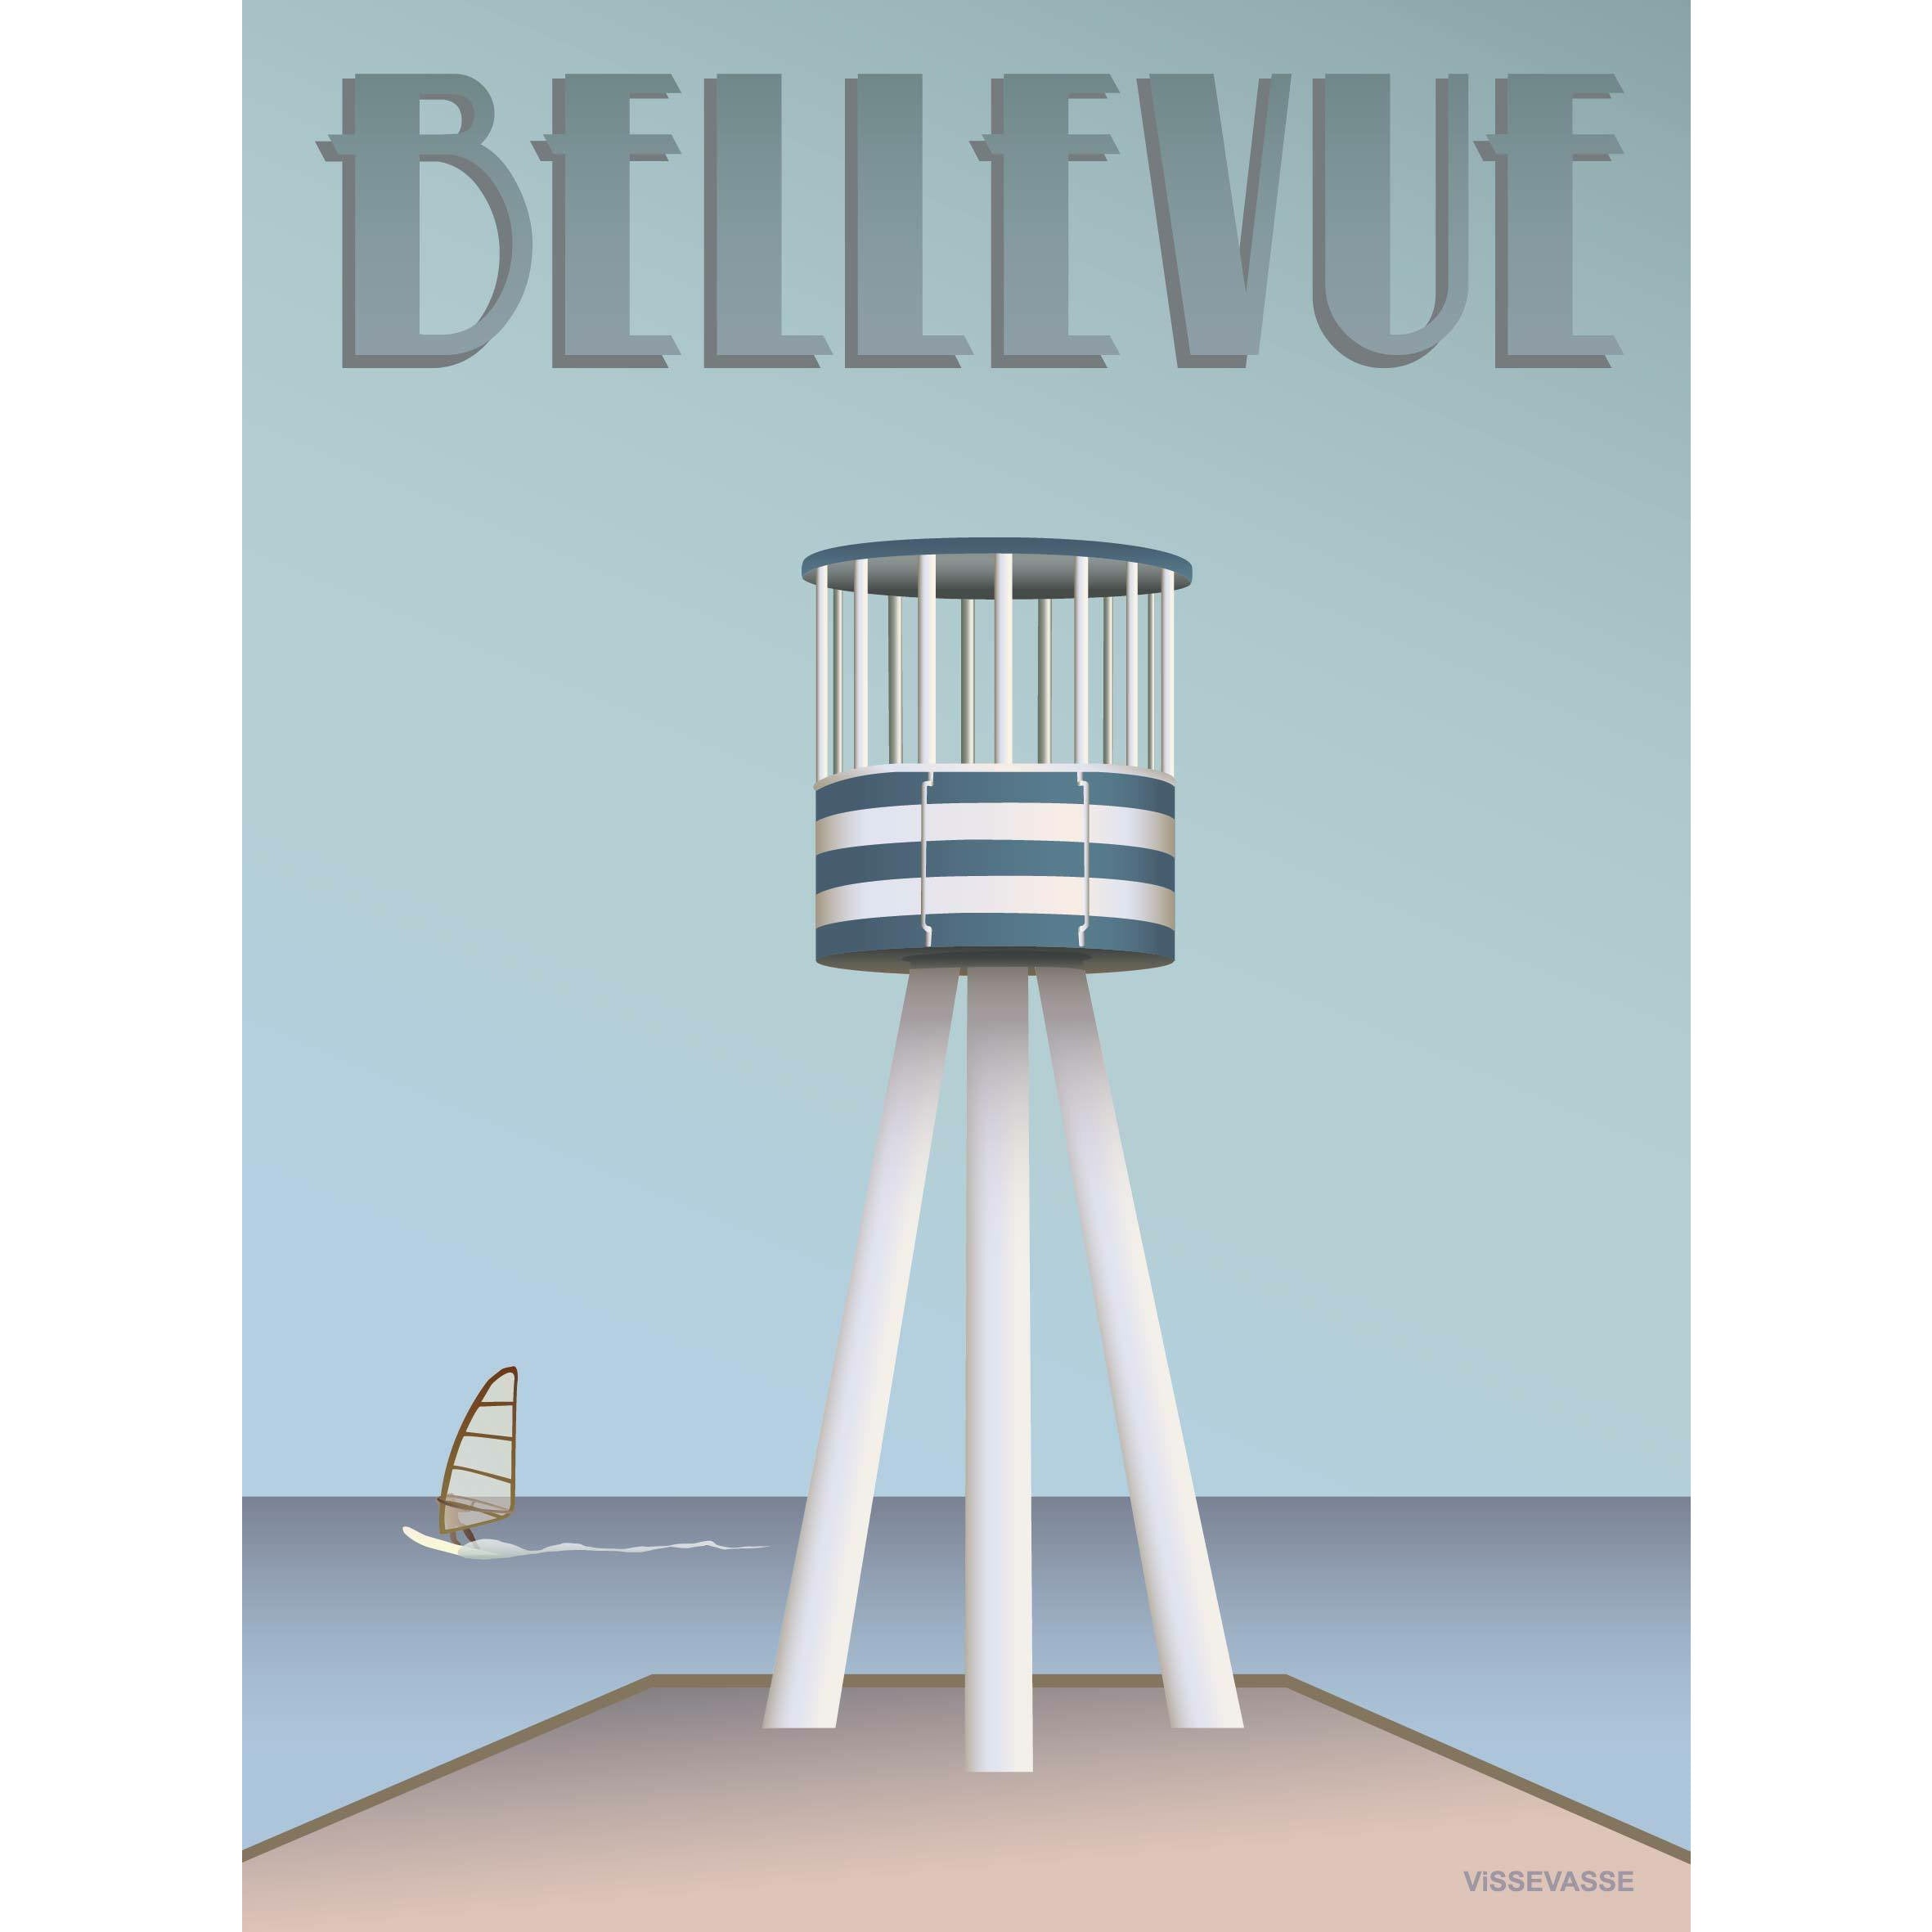 Vissevasse Bellevue Lifeguard Tower Poster, 70 X100 Cm